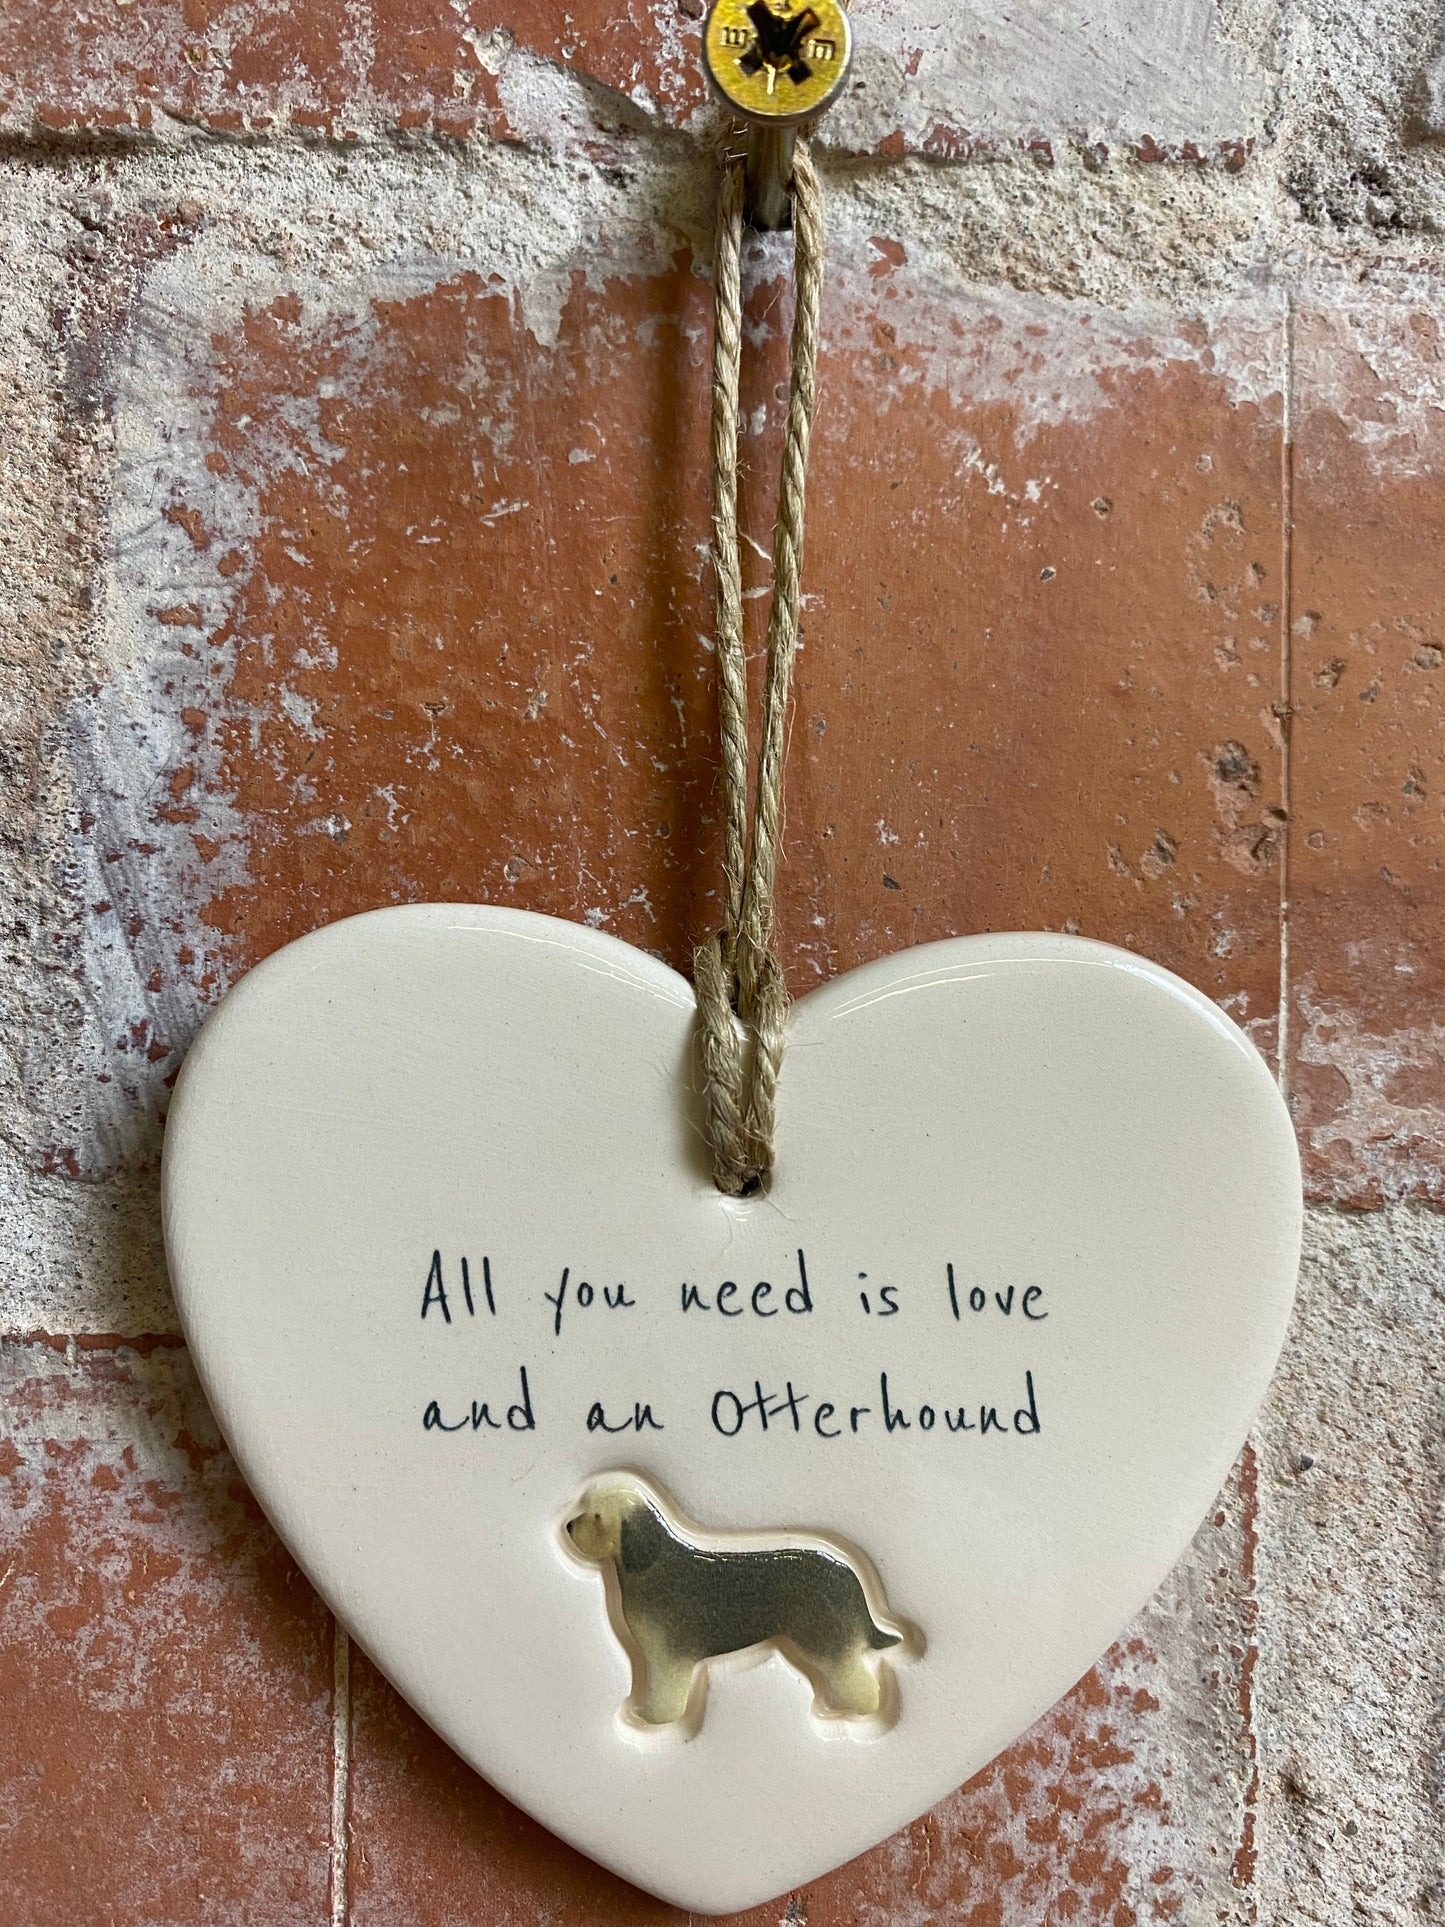 Otterhound ceramic heart